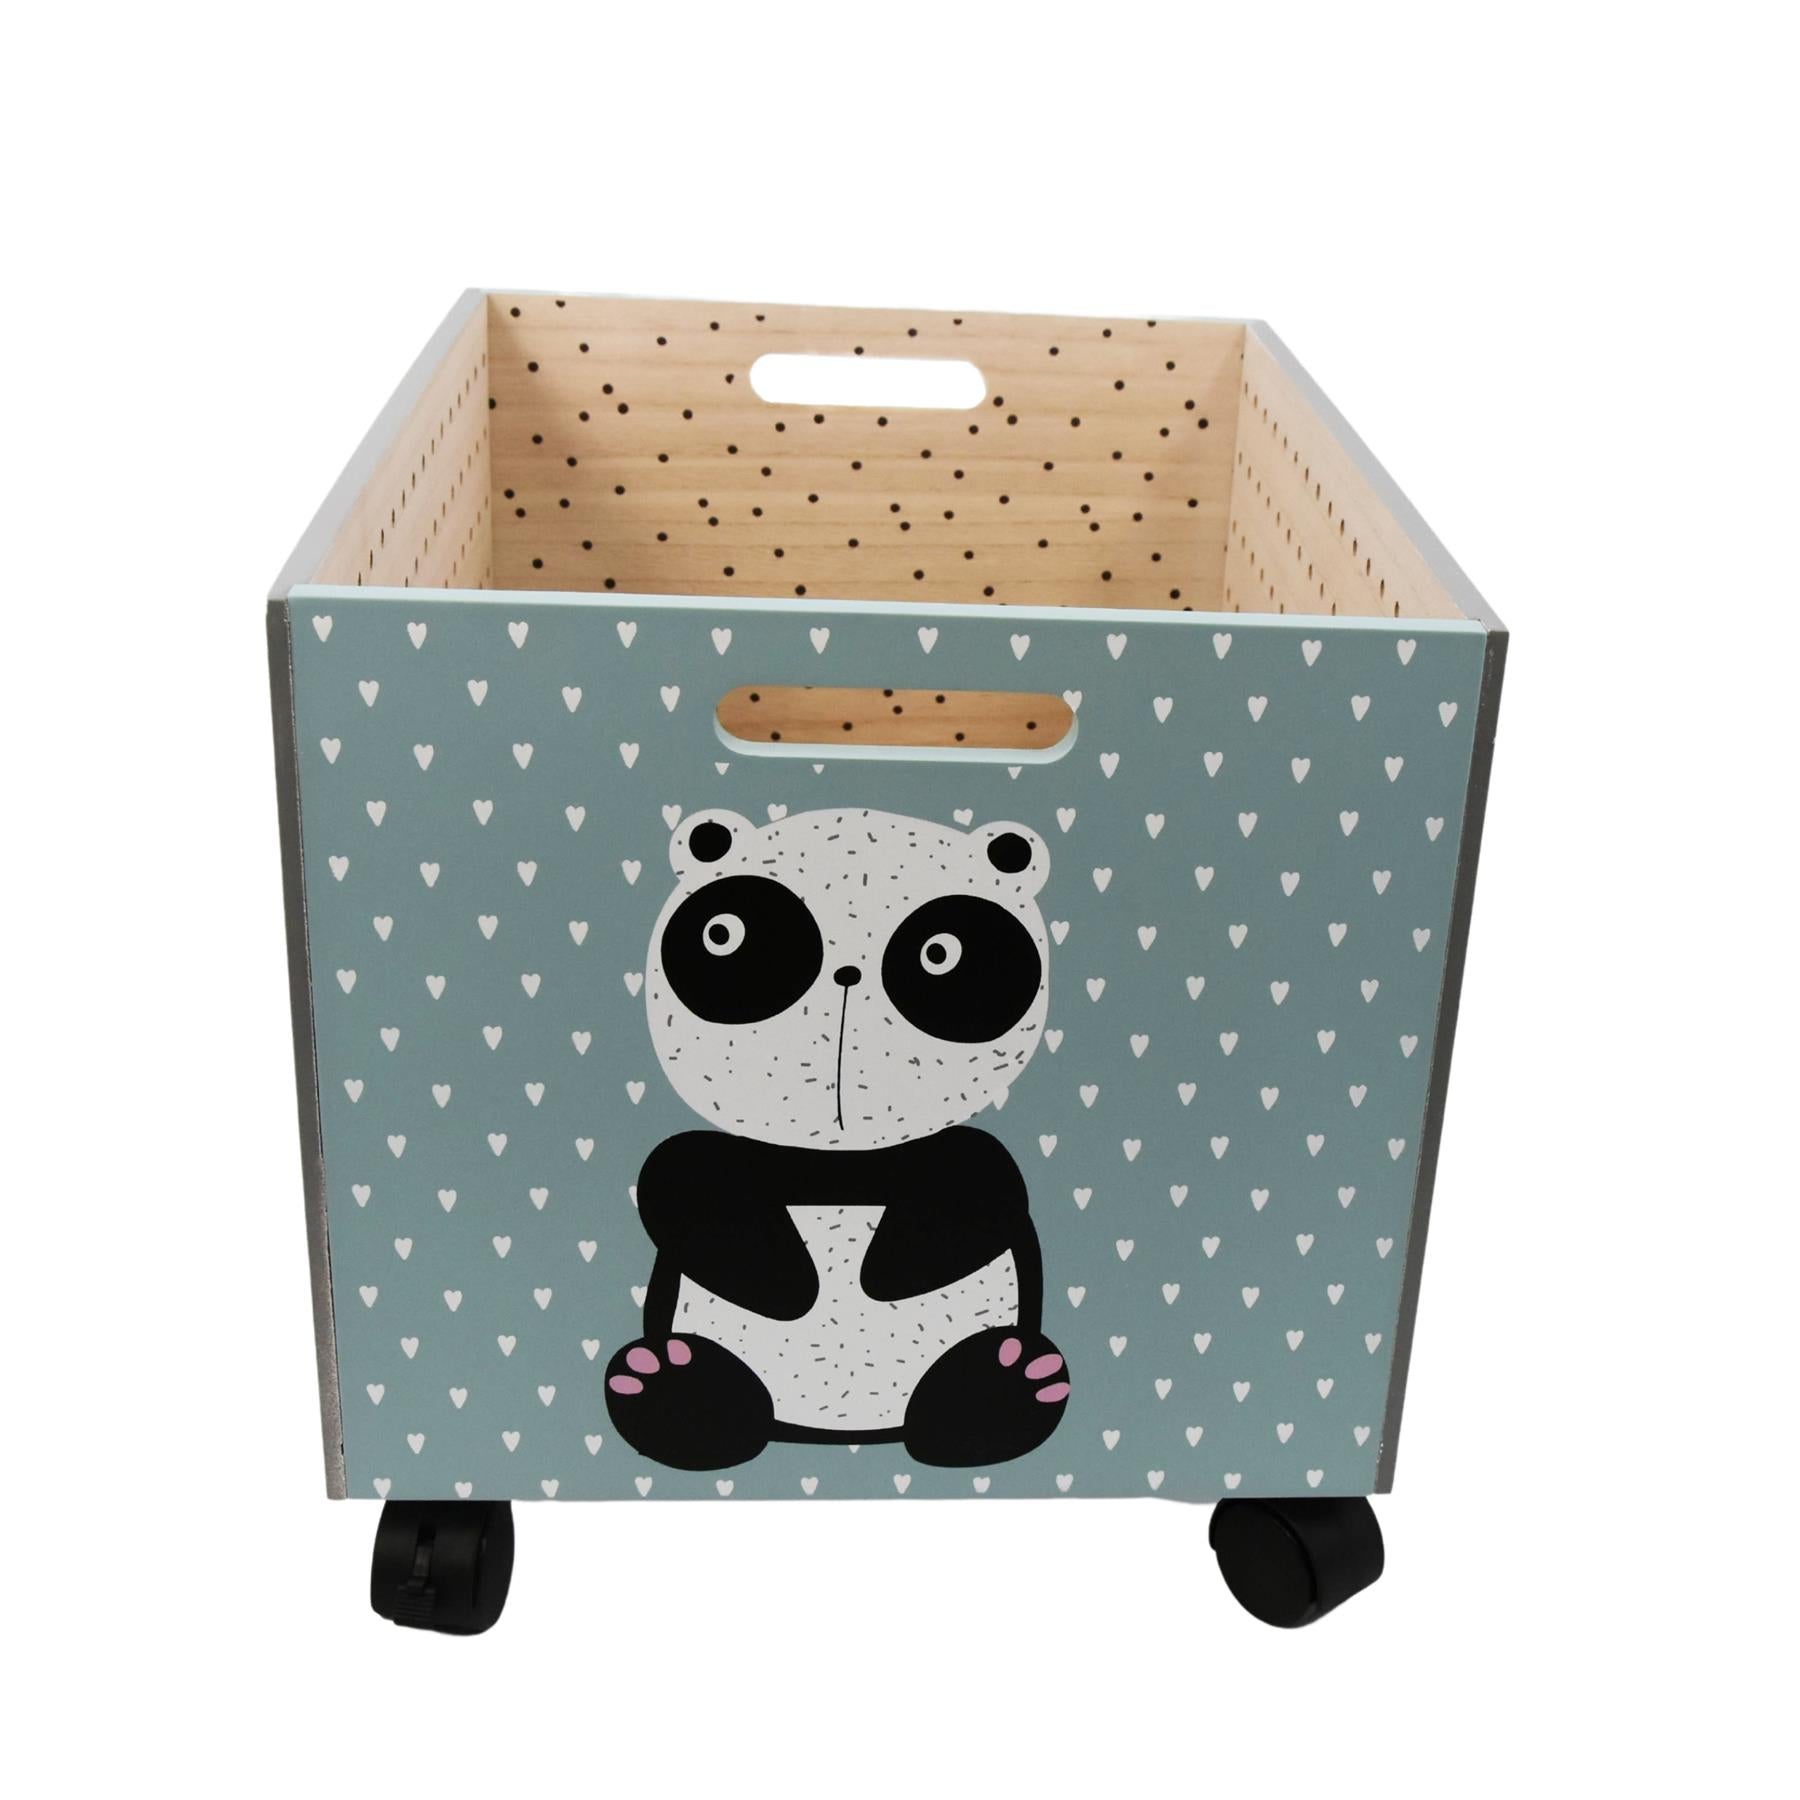 The Magic Toy Shop Kids Storage Box Panda Design Kids Wooden Storage Chest On Wheels